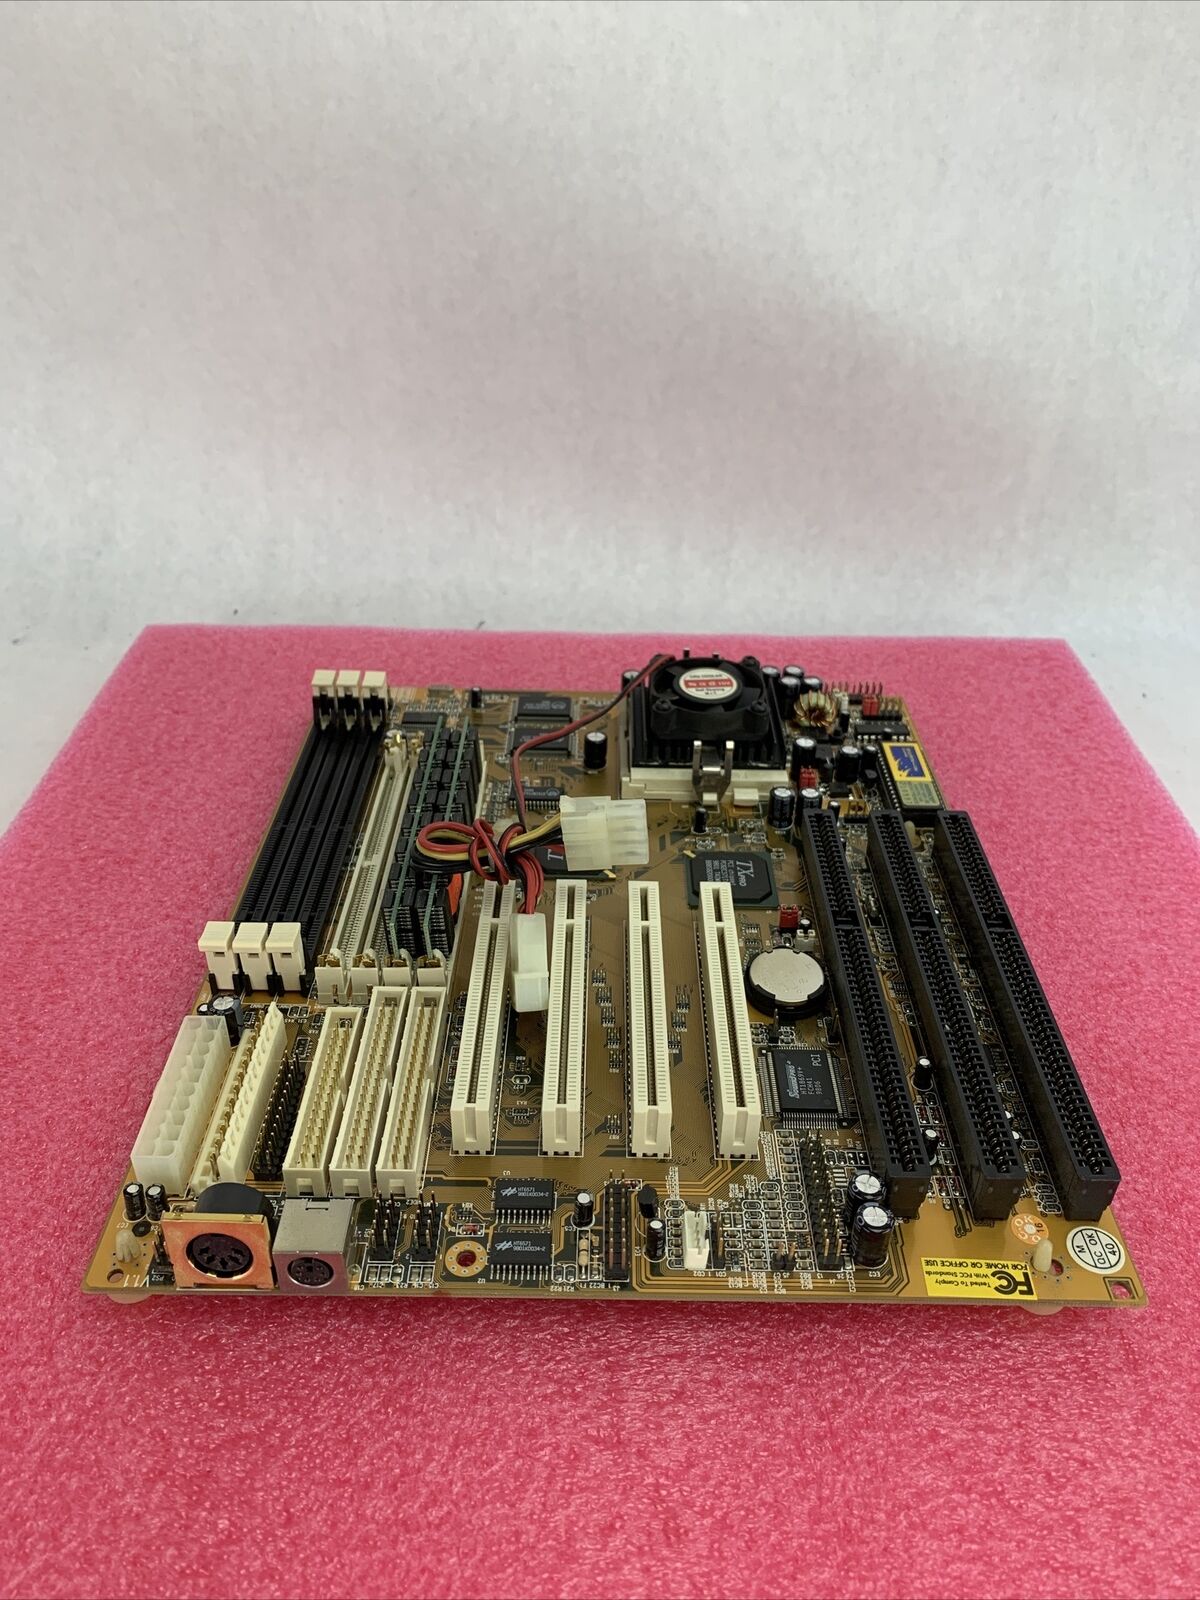 PC Chips M575 Motherboard Intel Pentium MMX 200MHz 64MB RAM 3x ISA